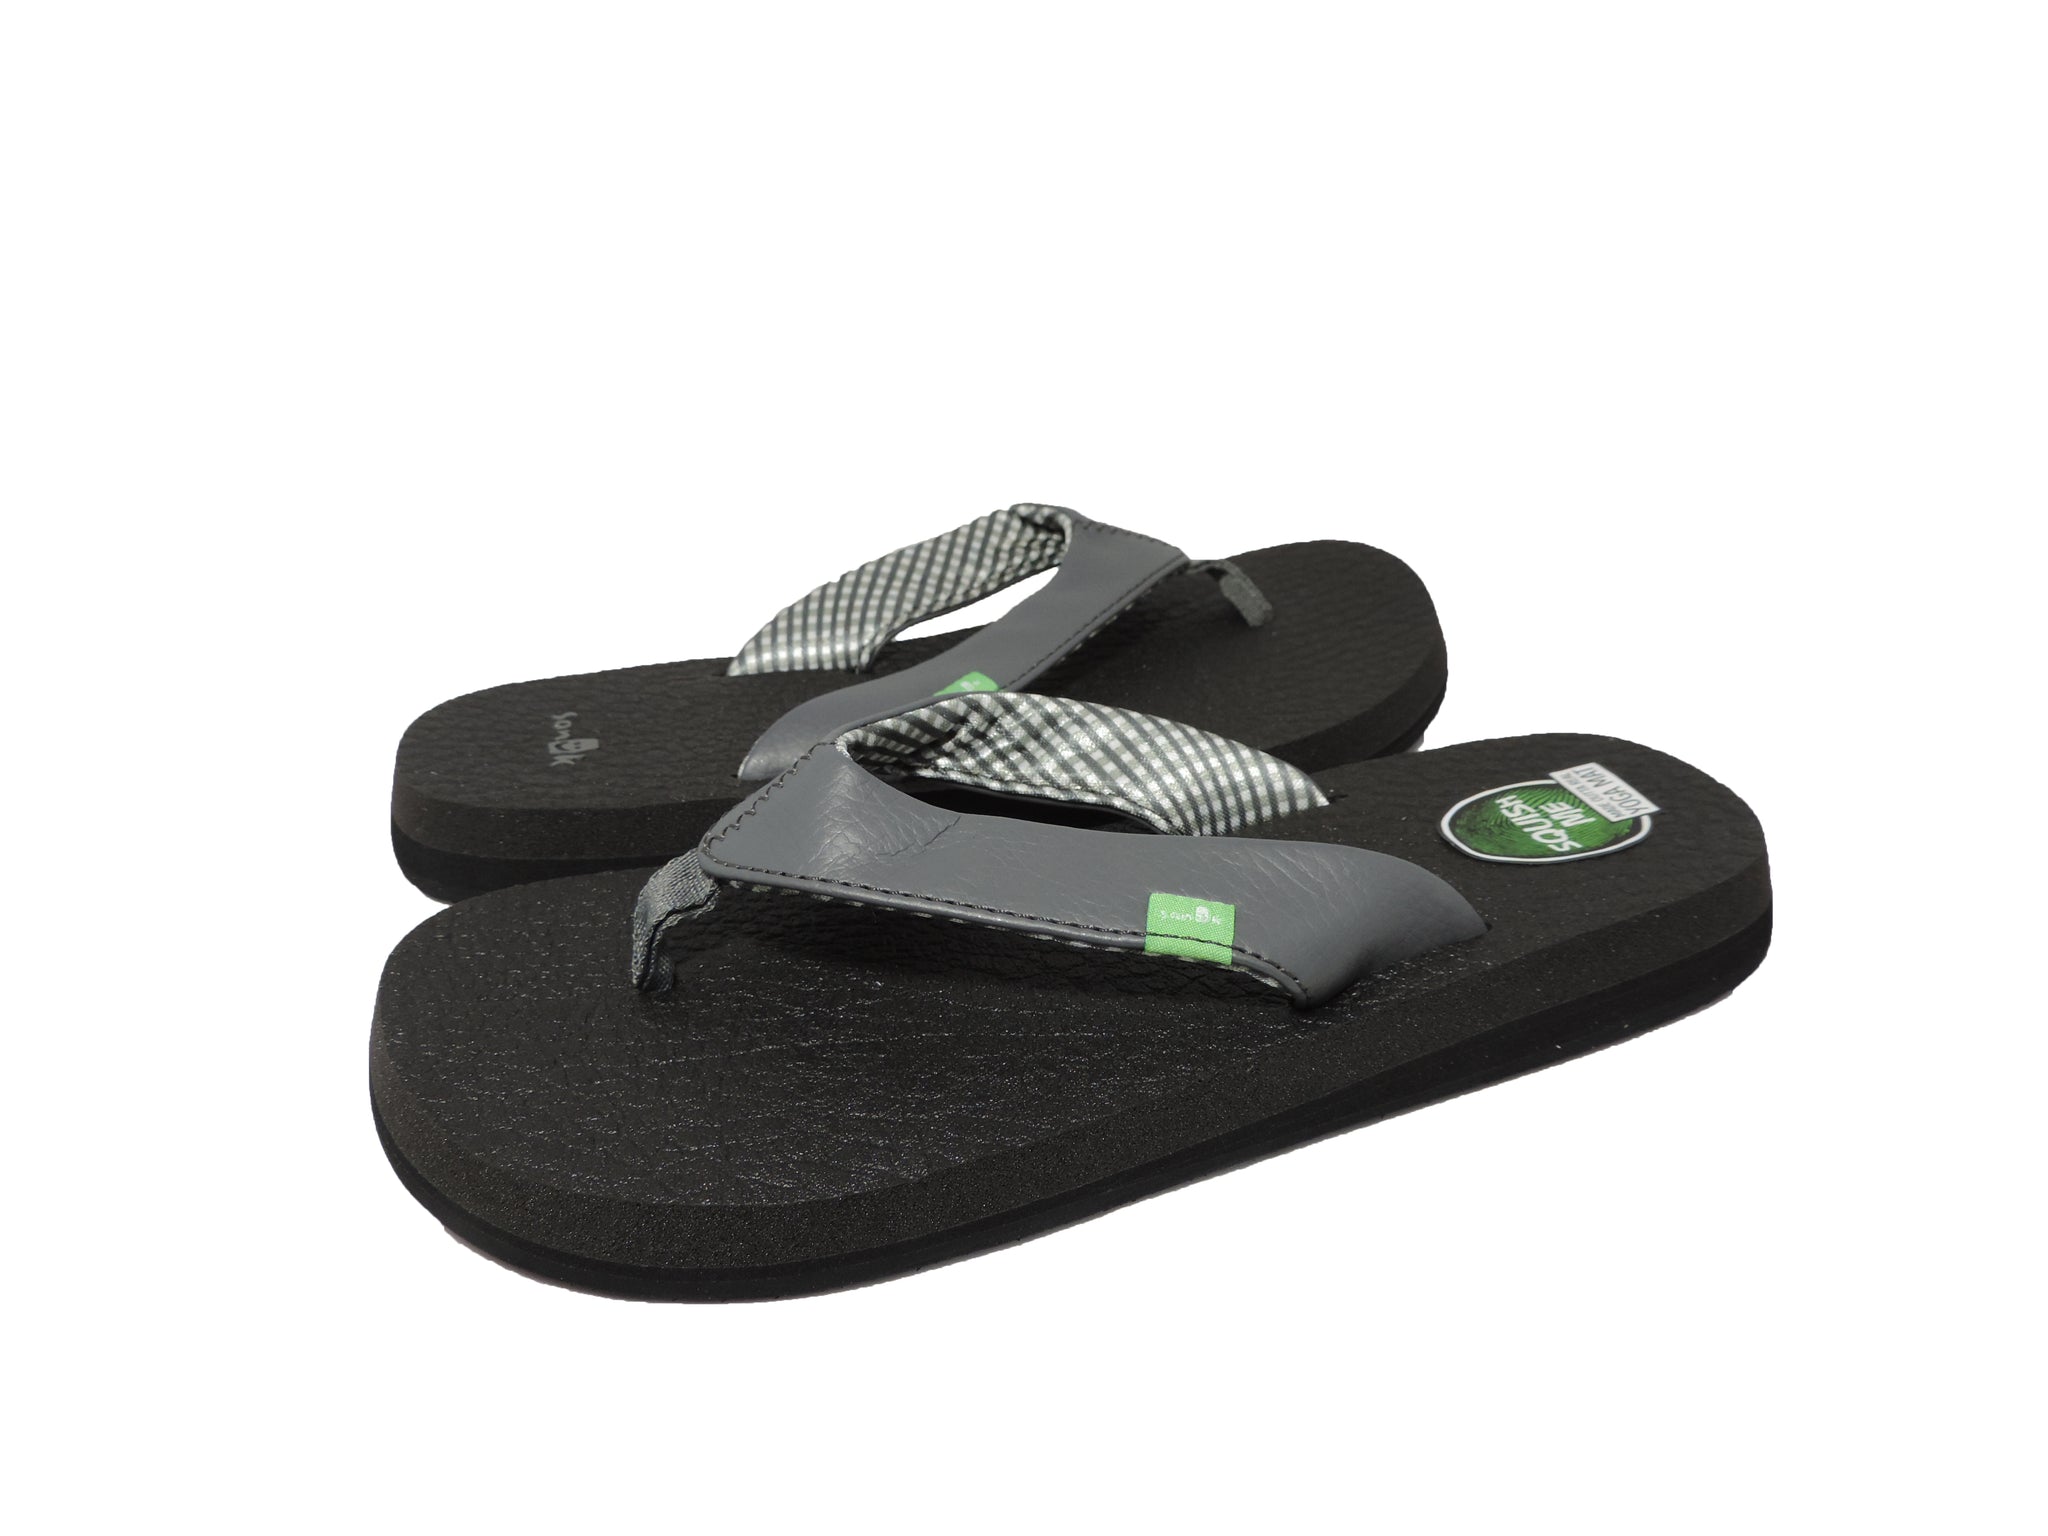 Sanuk sandals shoes size 10 yoga mat sling 